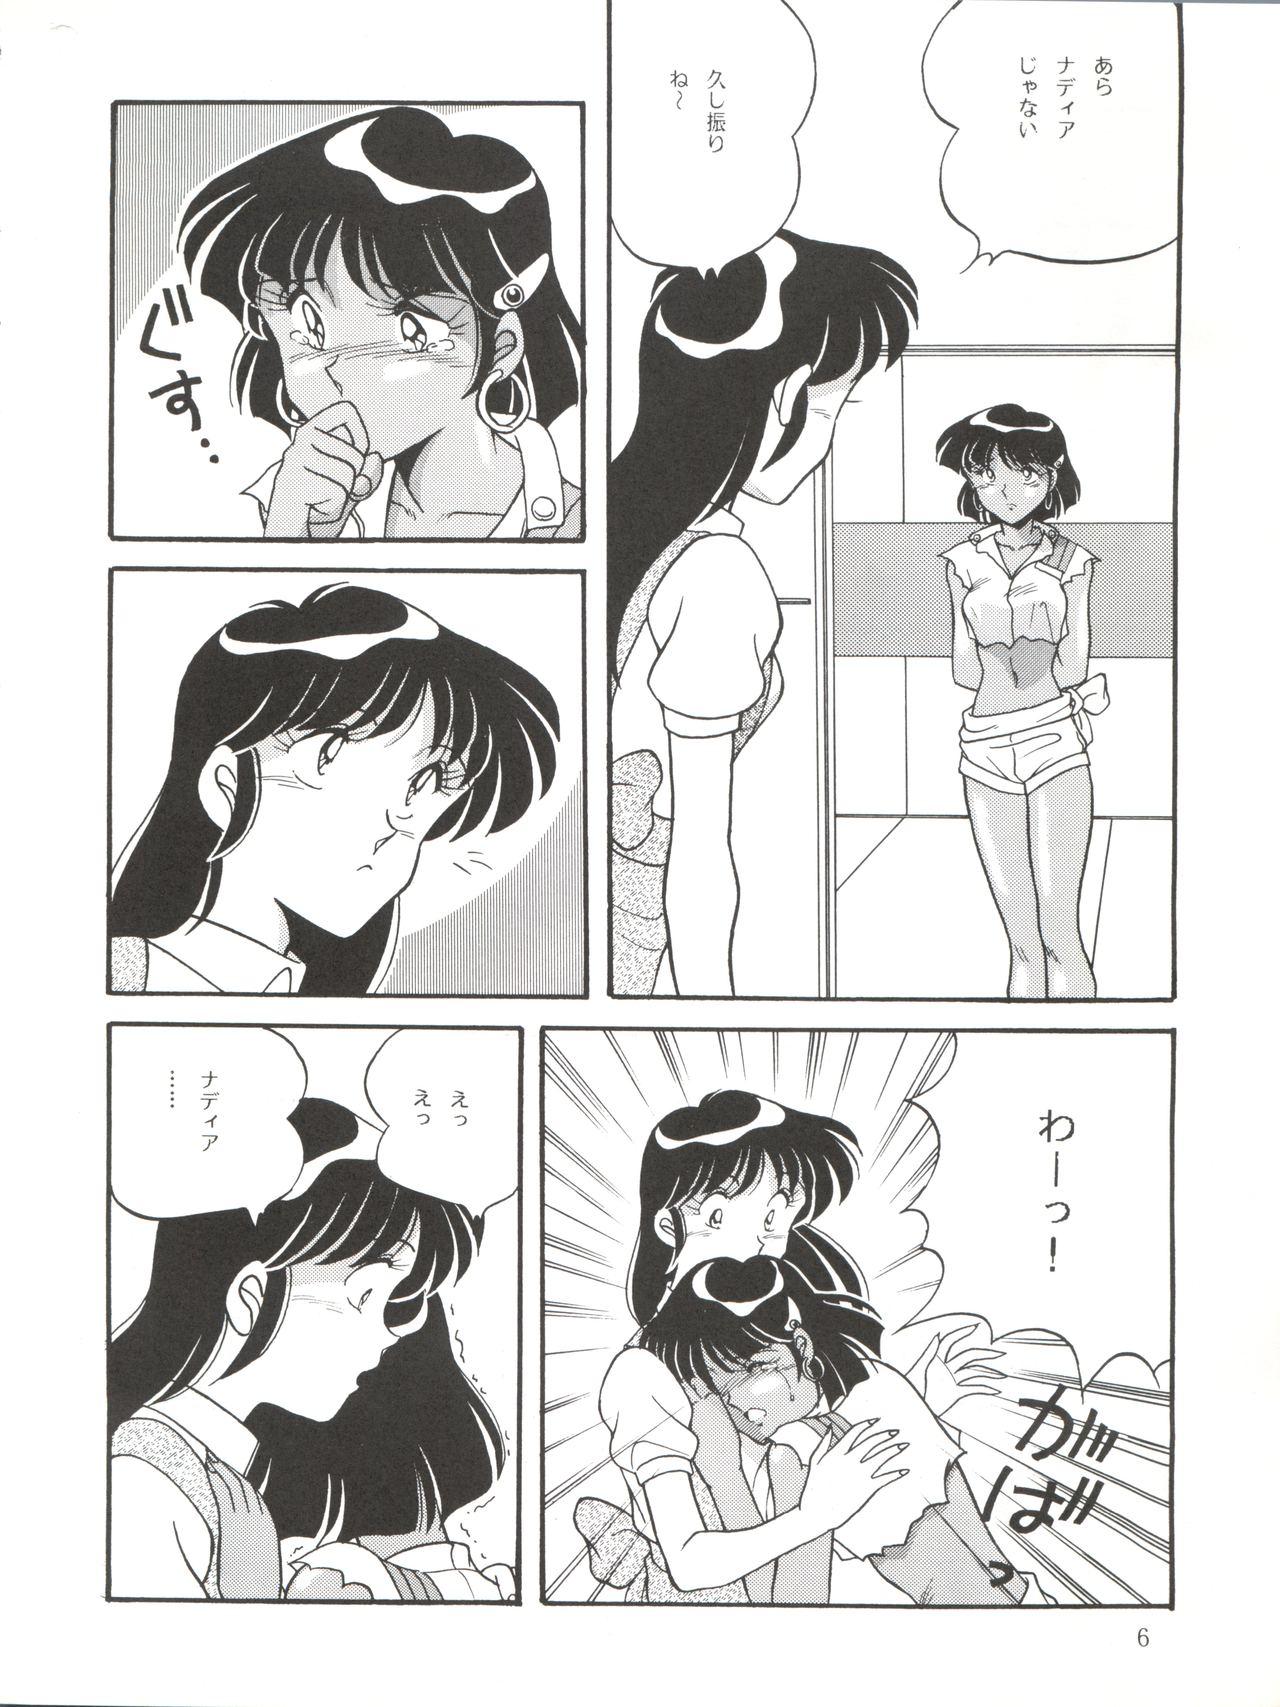 Camgirls Vocalization 2 - Fushigi no umi no nadia Furry - Page 6